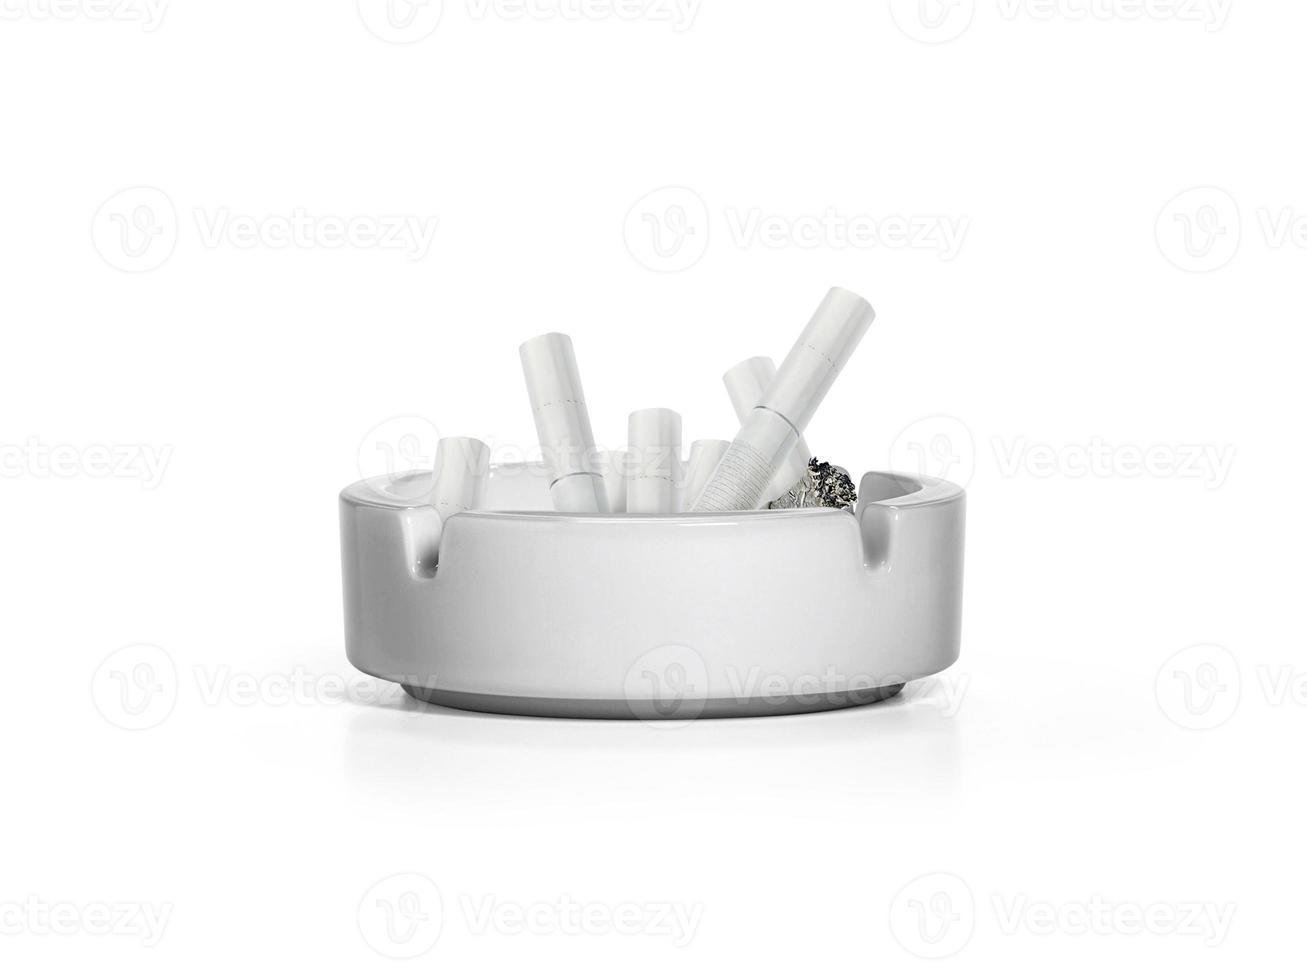 Ashtray full of cigarettes butts on white background photo